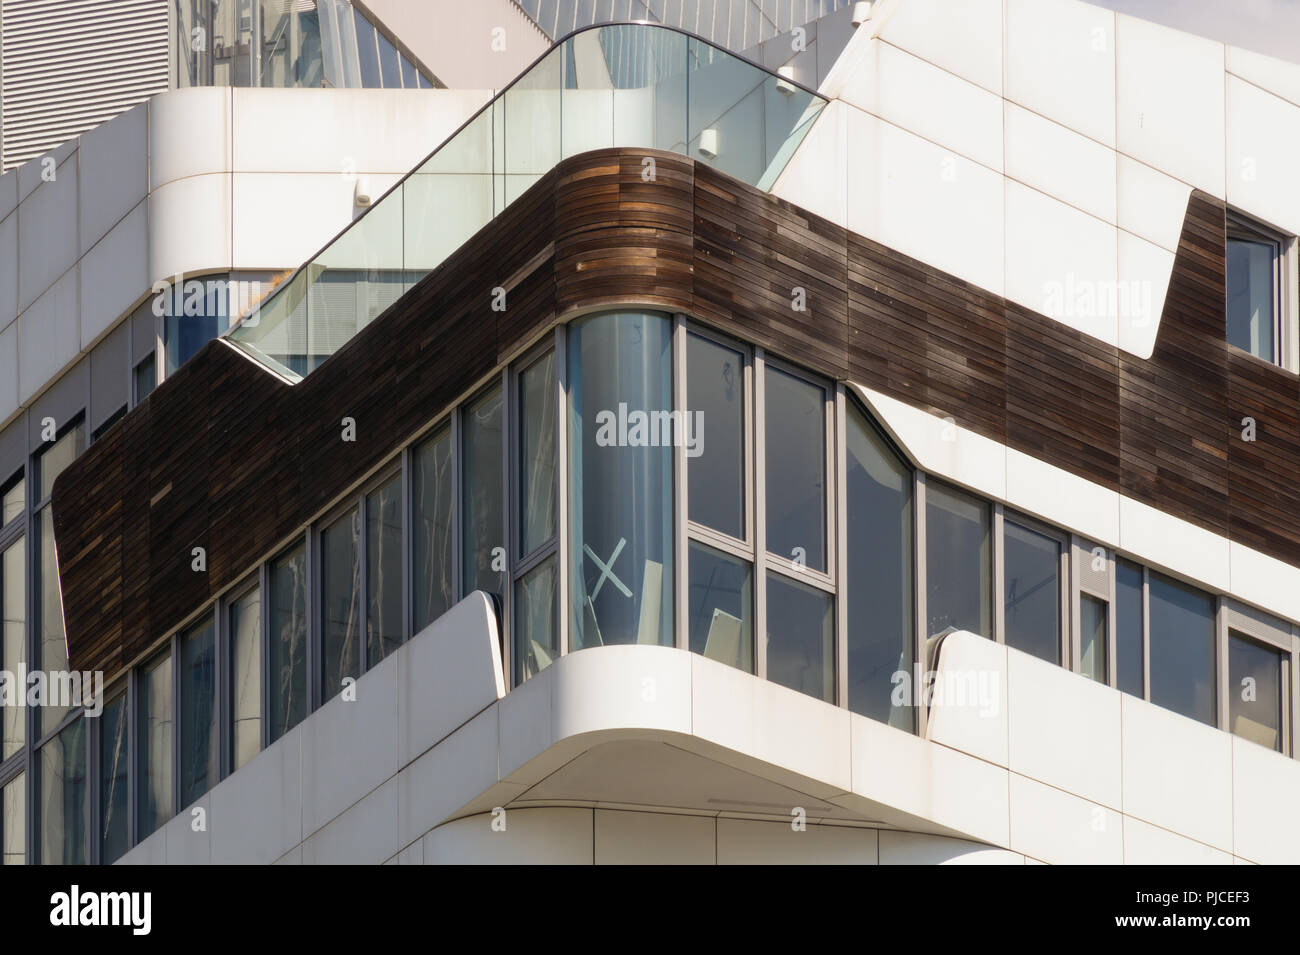 Zaha Hadid Architects, CityLife Milano residential building complex, 2014, Milan, Italy, exterior view Stock Photo